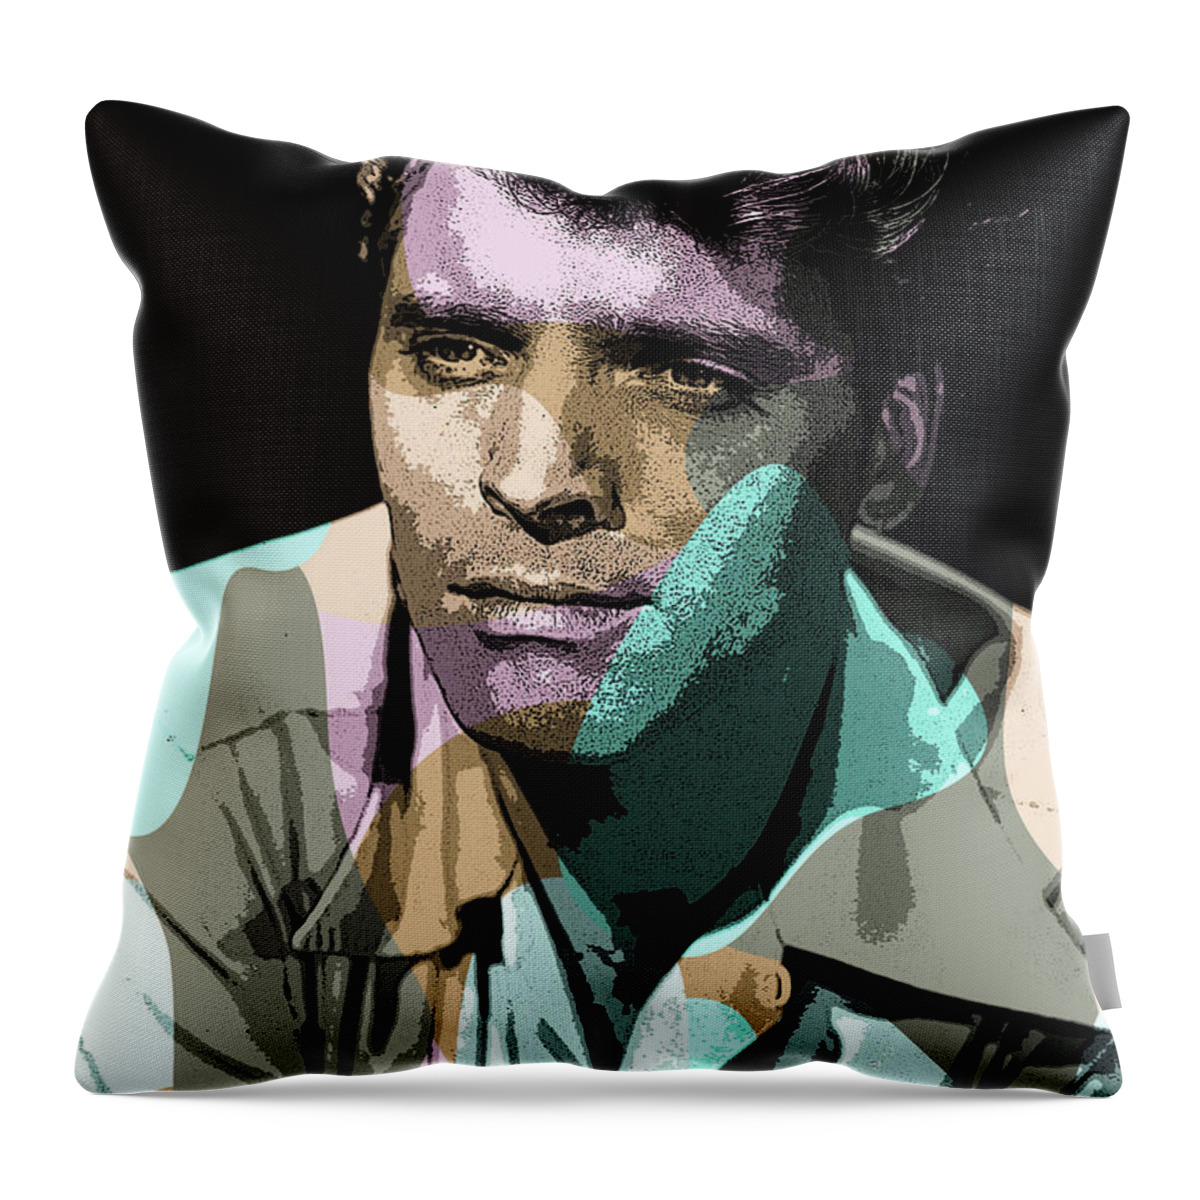 Burt Lancaster Throw Pillow featuring the mixed media Burt Lancaster modernized portrait by Movie World Posters